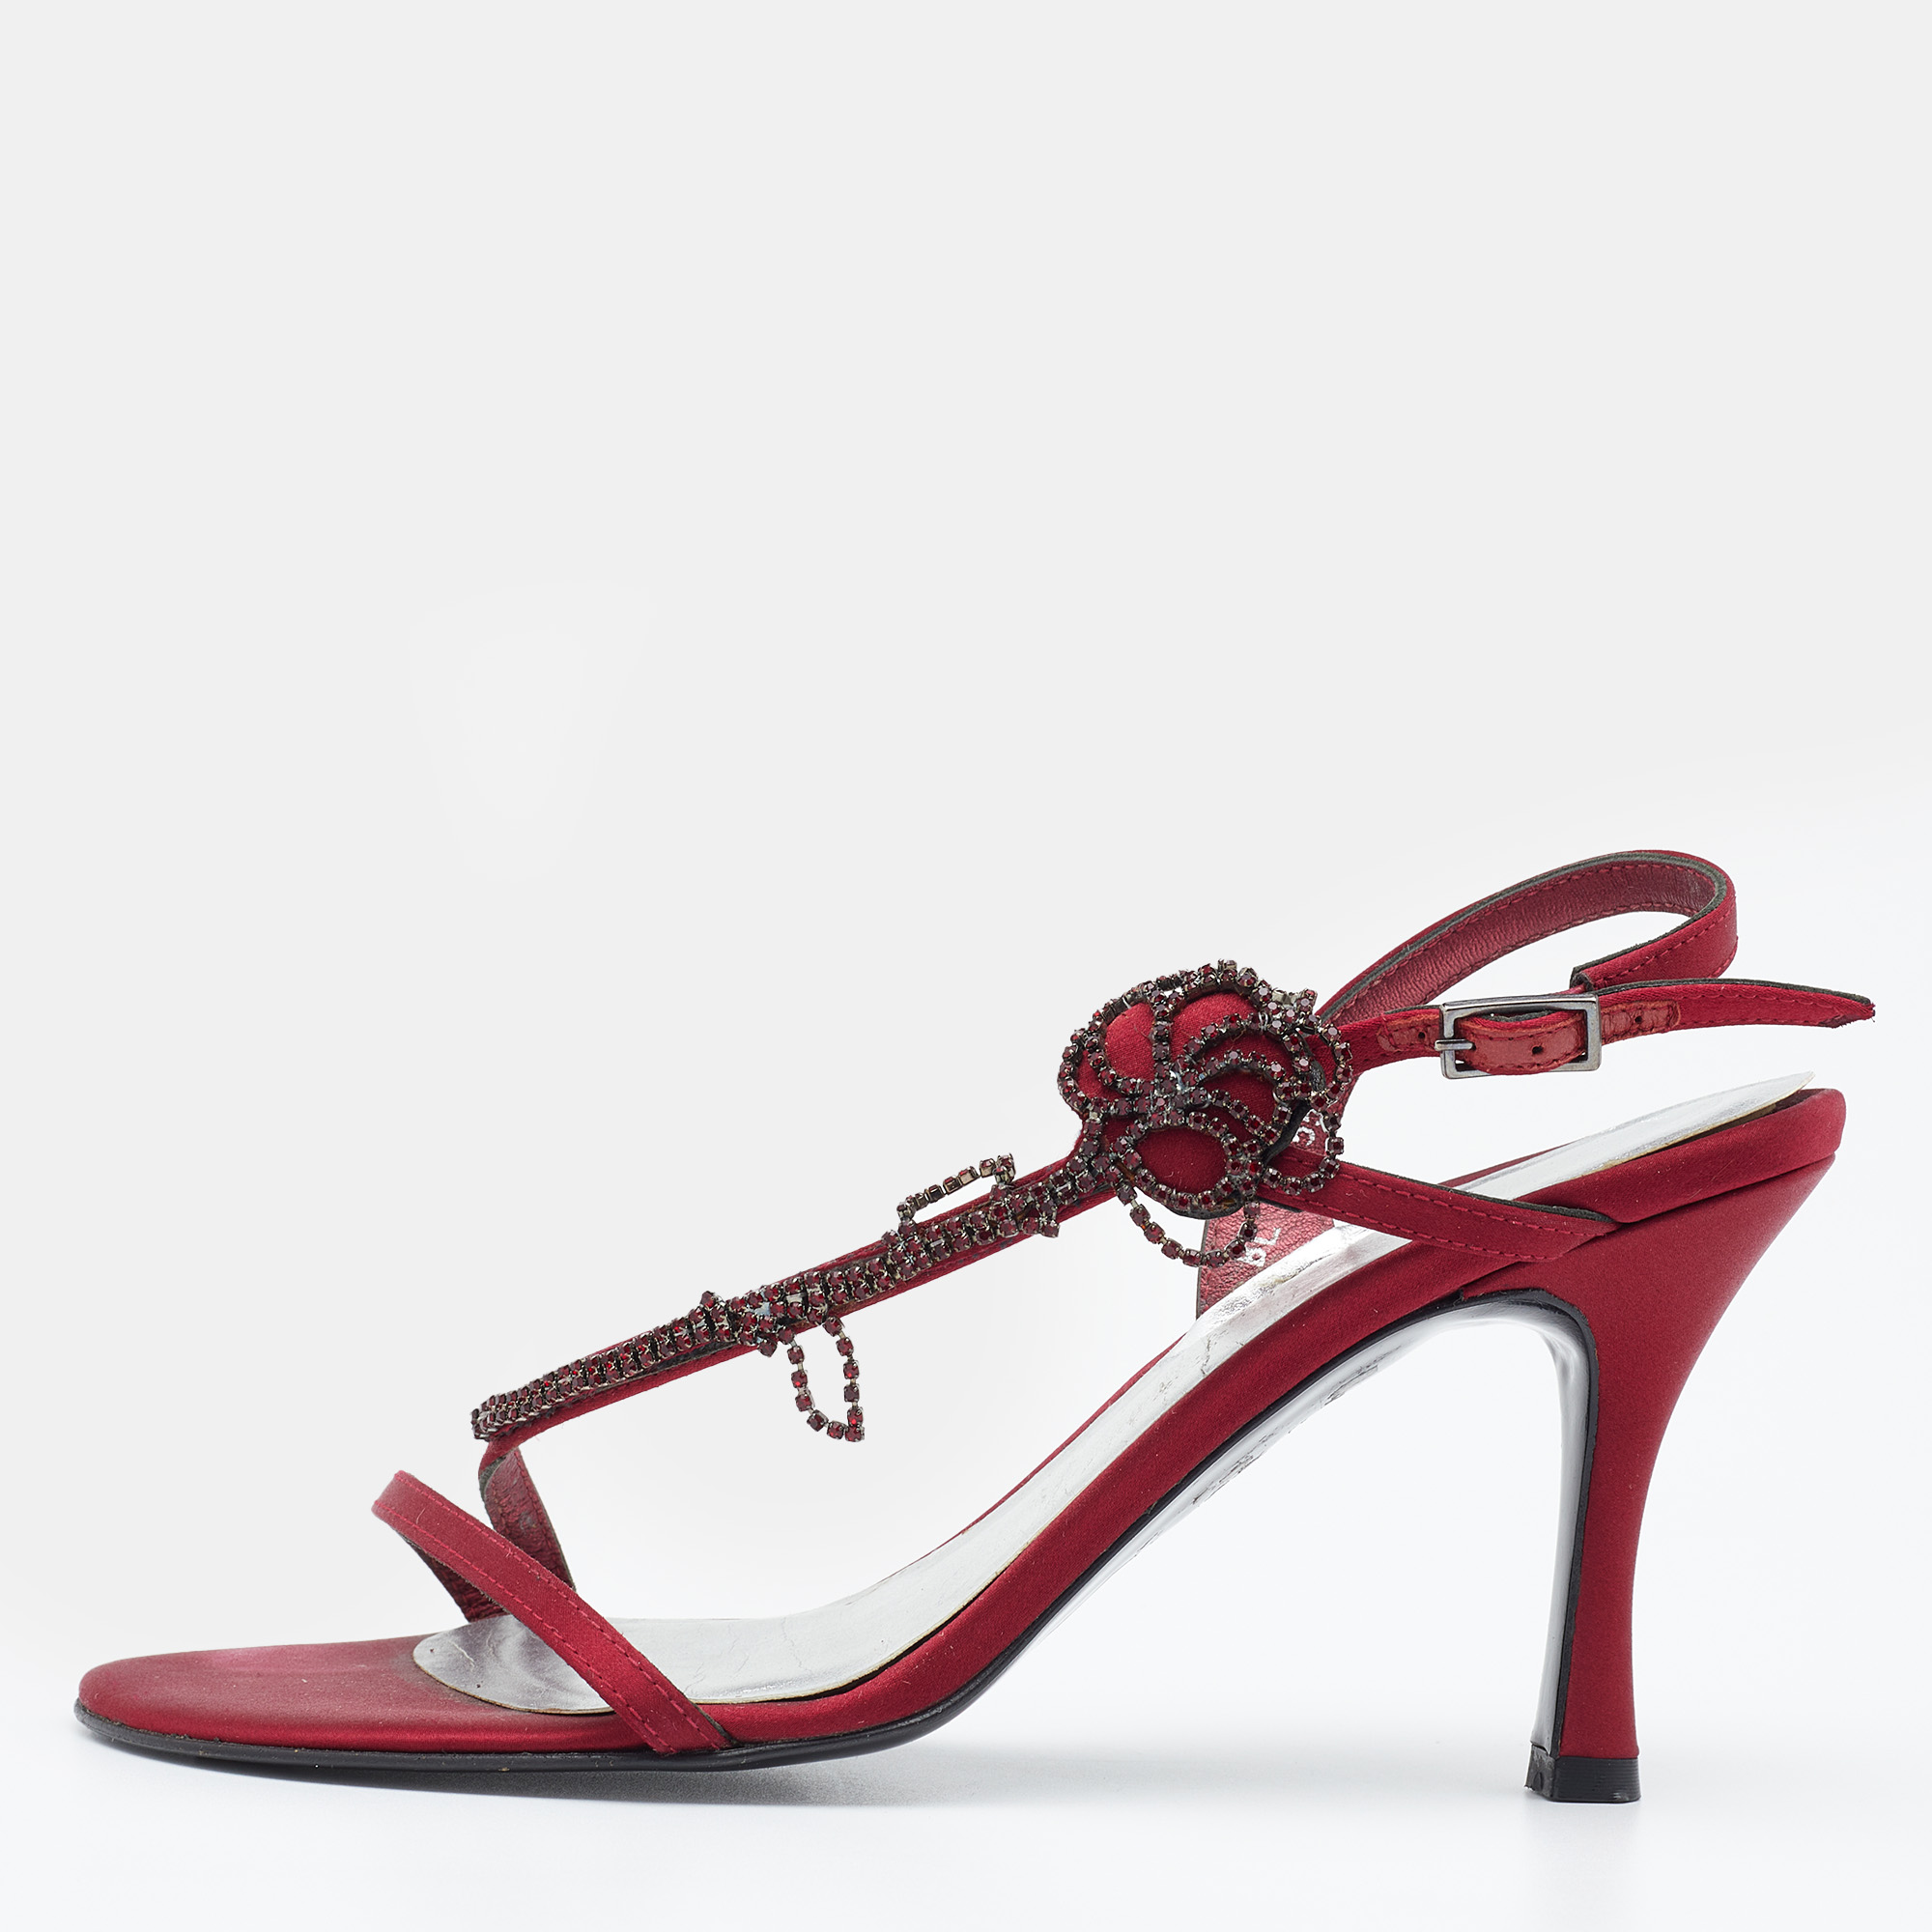 Stuart weitzman burgundy satin crystal embellished slingback sandals size 37